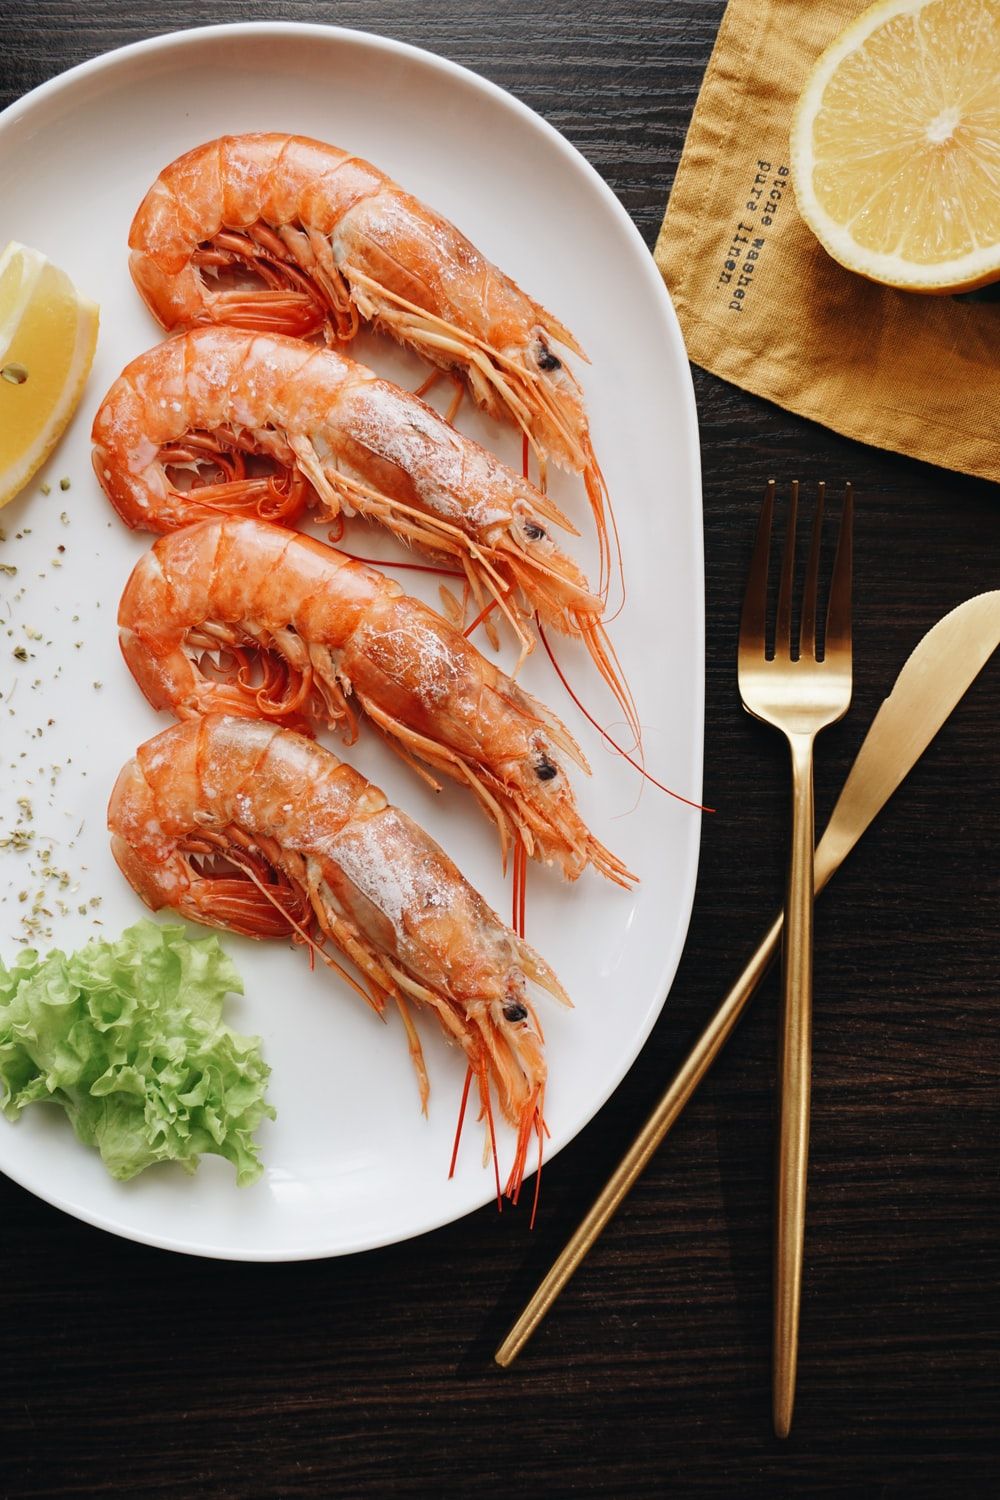 Shrimp Picture. Download Free Image